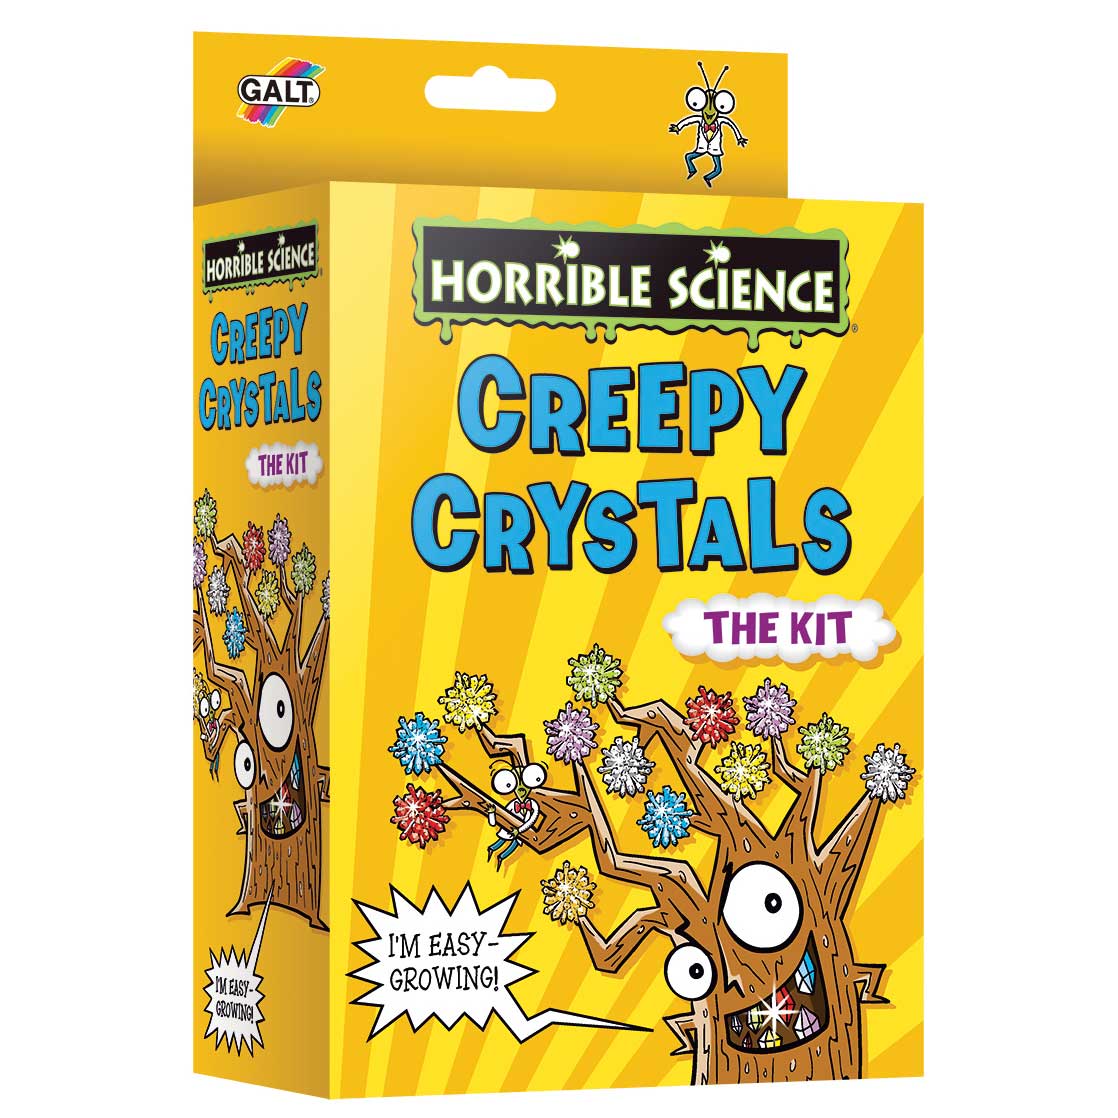 Horrible Science- Creepy Crystals (4M-LL5260)